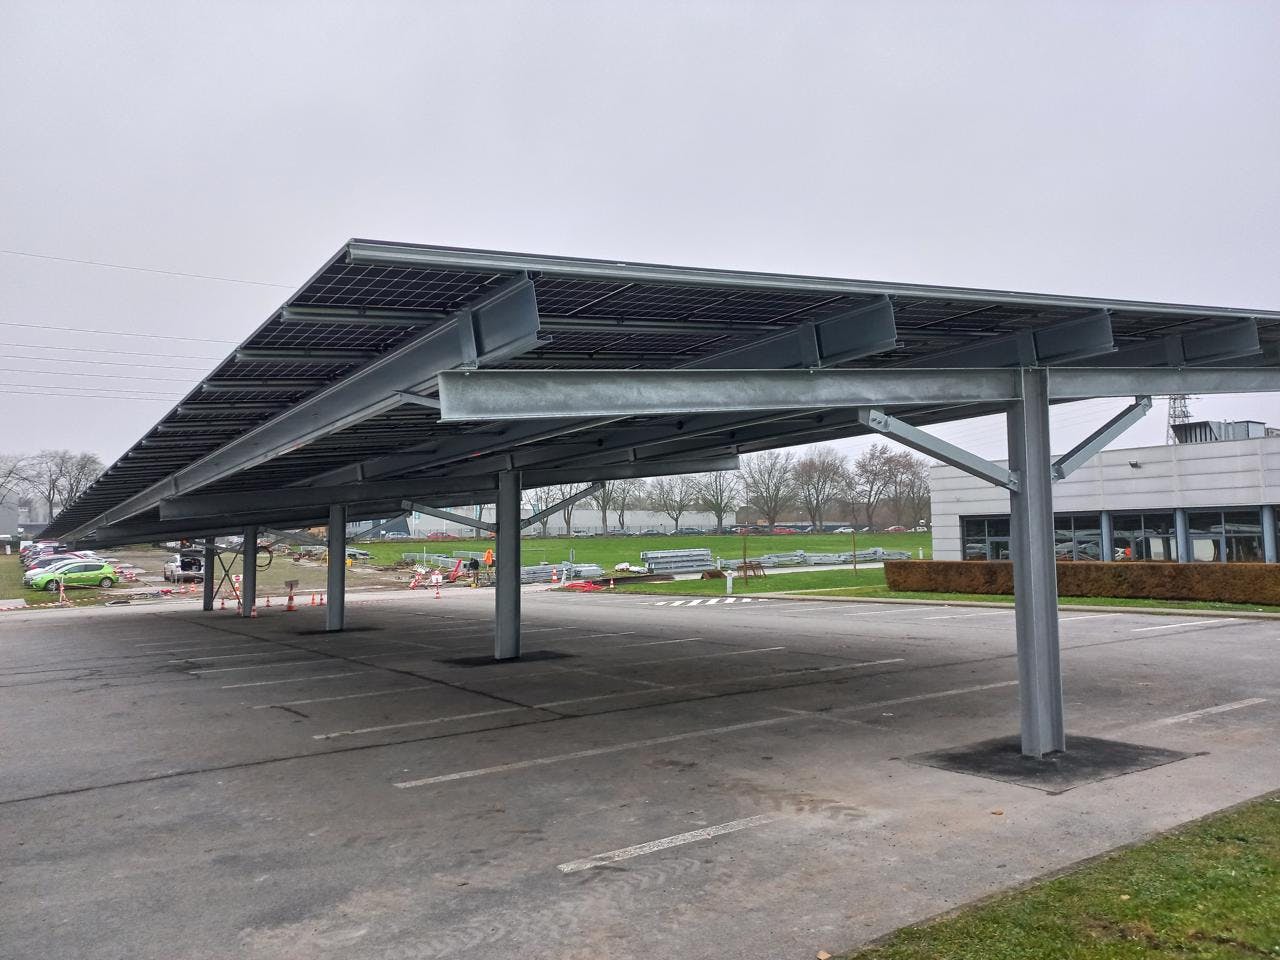 Greenbuddies complete a 1 MWp carport for Adiwatt in Belgium